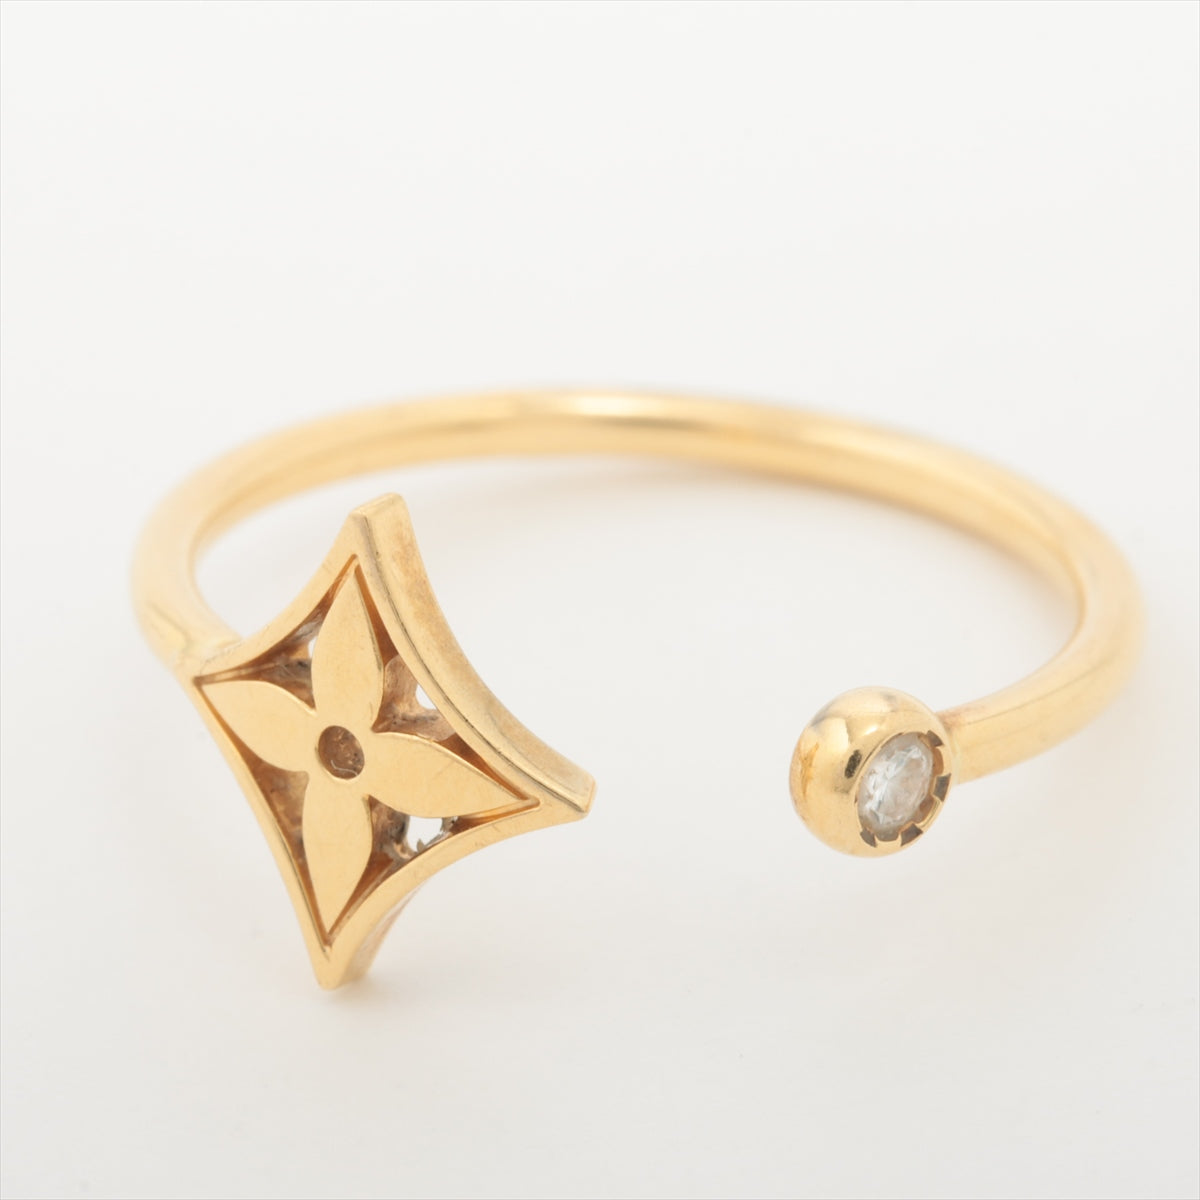 Louis Vuitton Idylle Blossom Monogram Ring Set - Rings - Jewellery